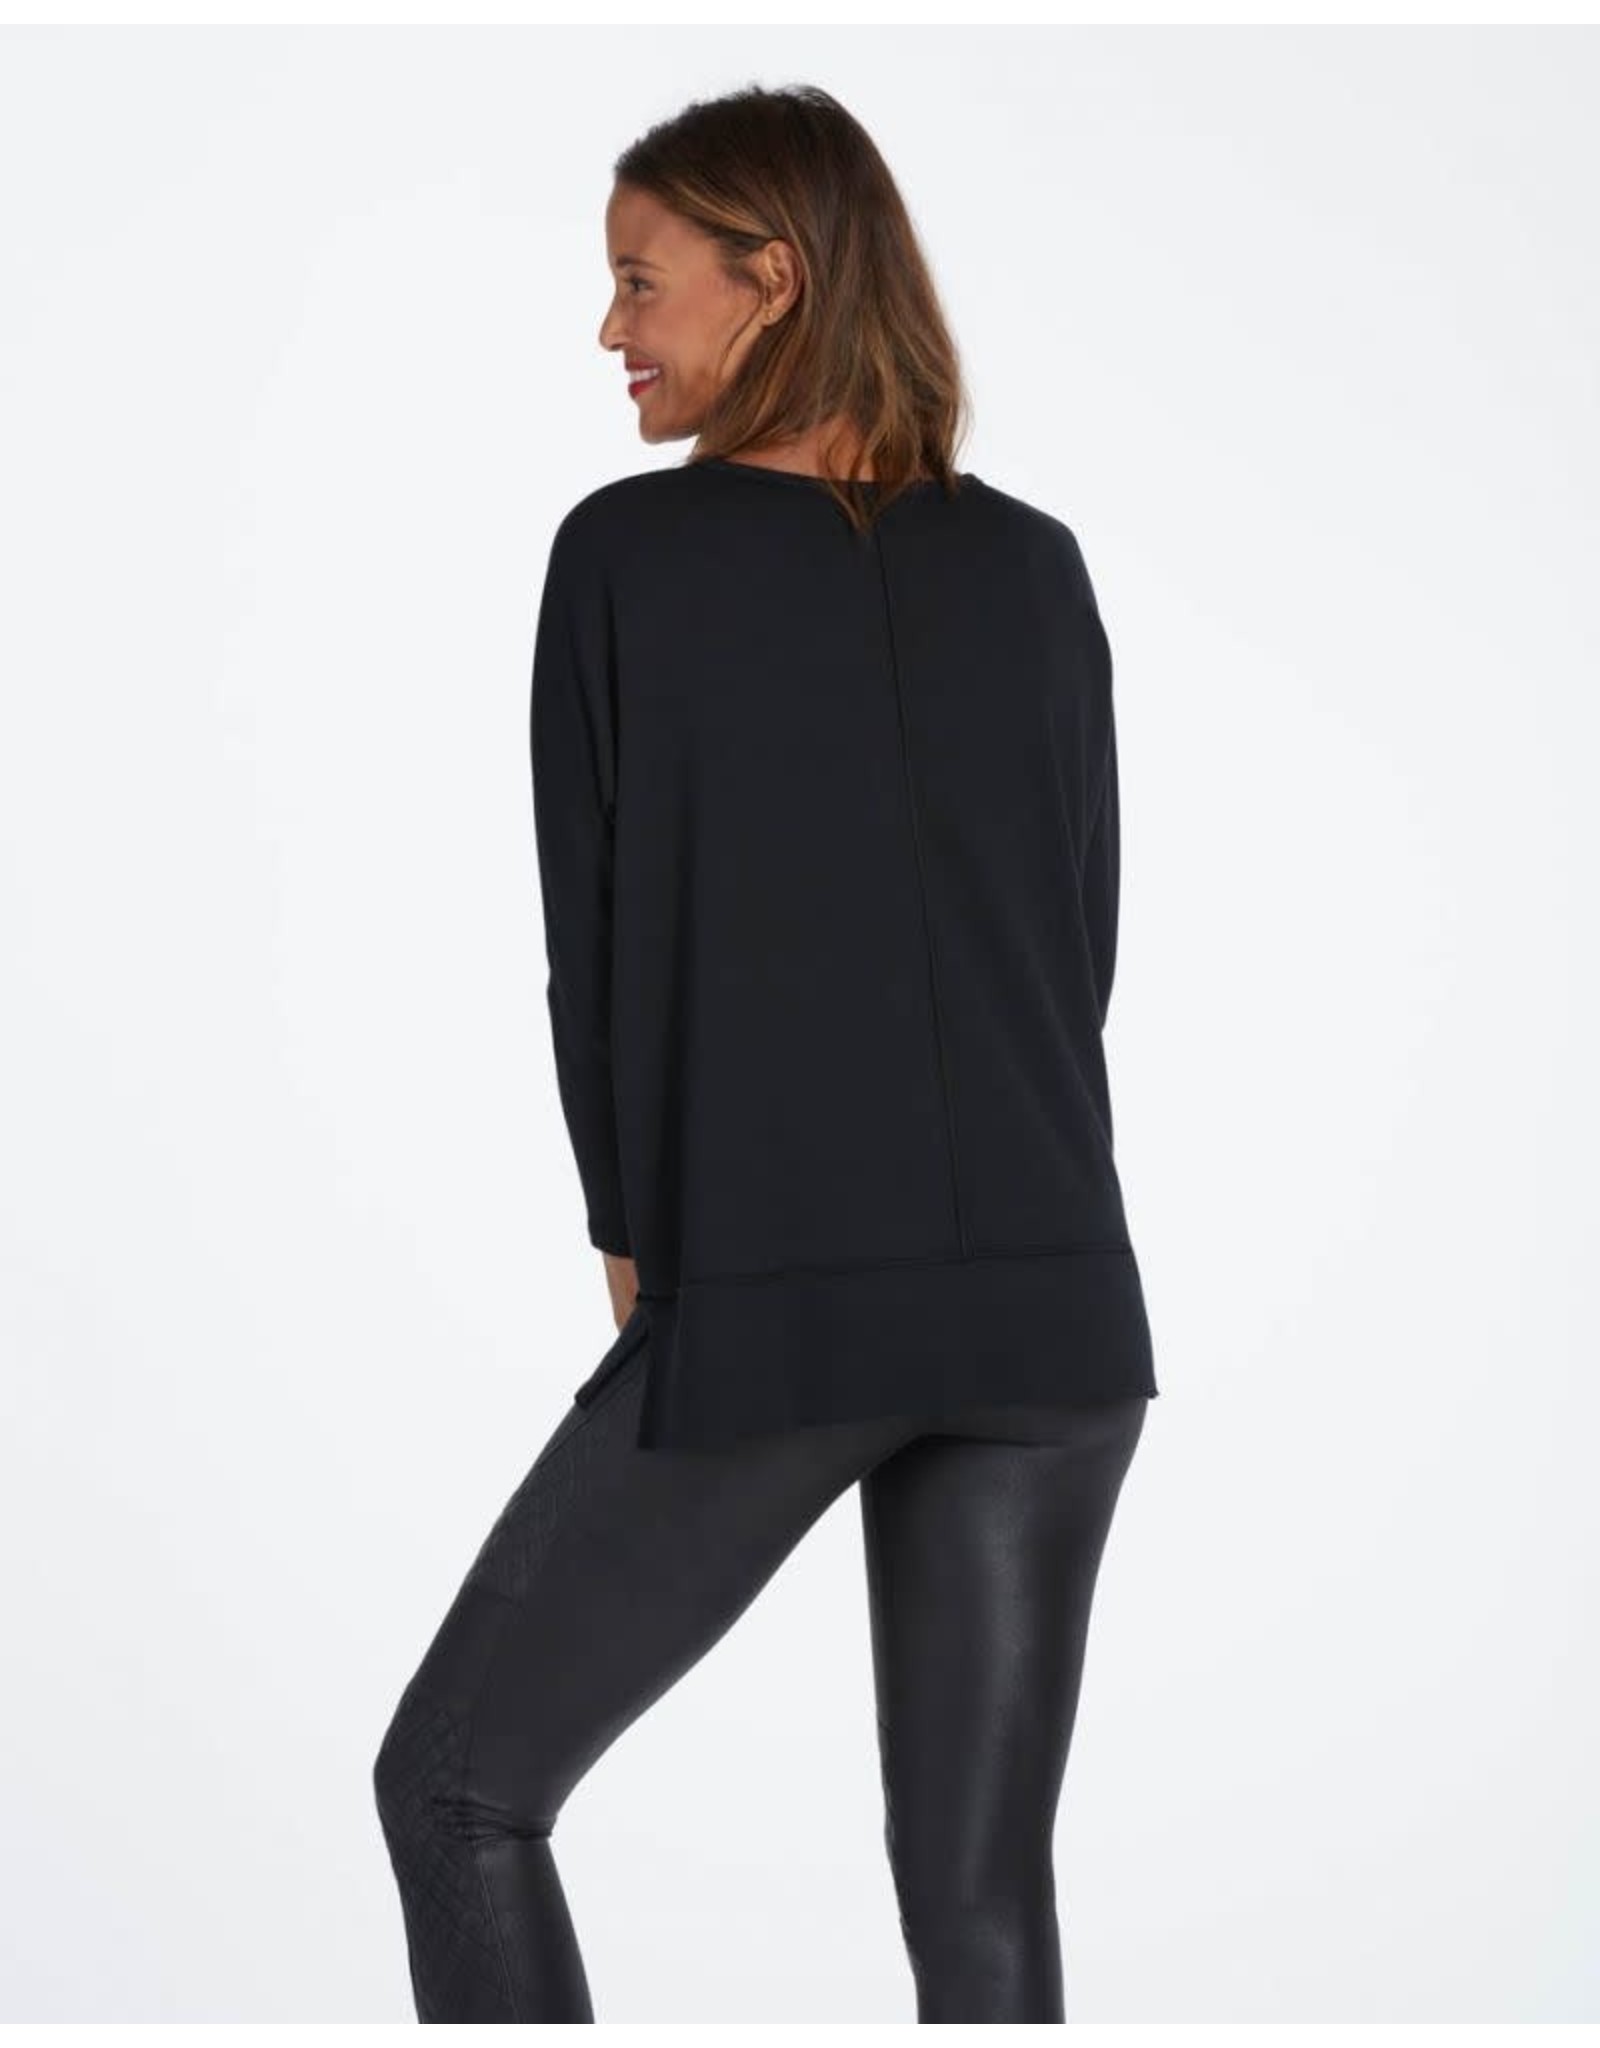 Spanx Length Top Dolman Sweatshirt S Pullover Tunic Black